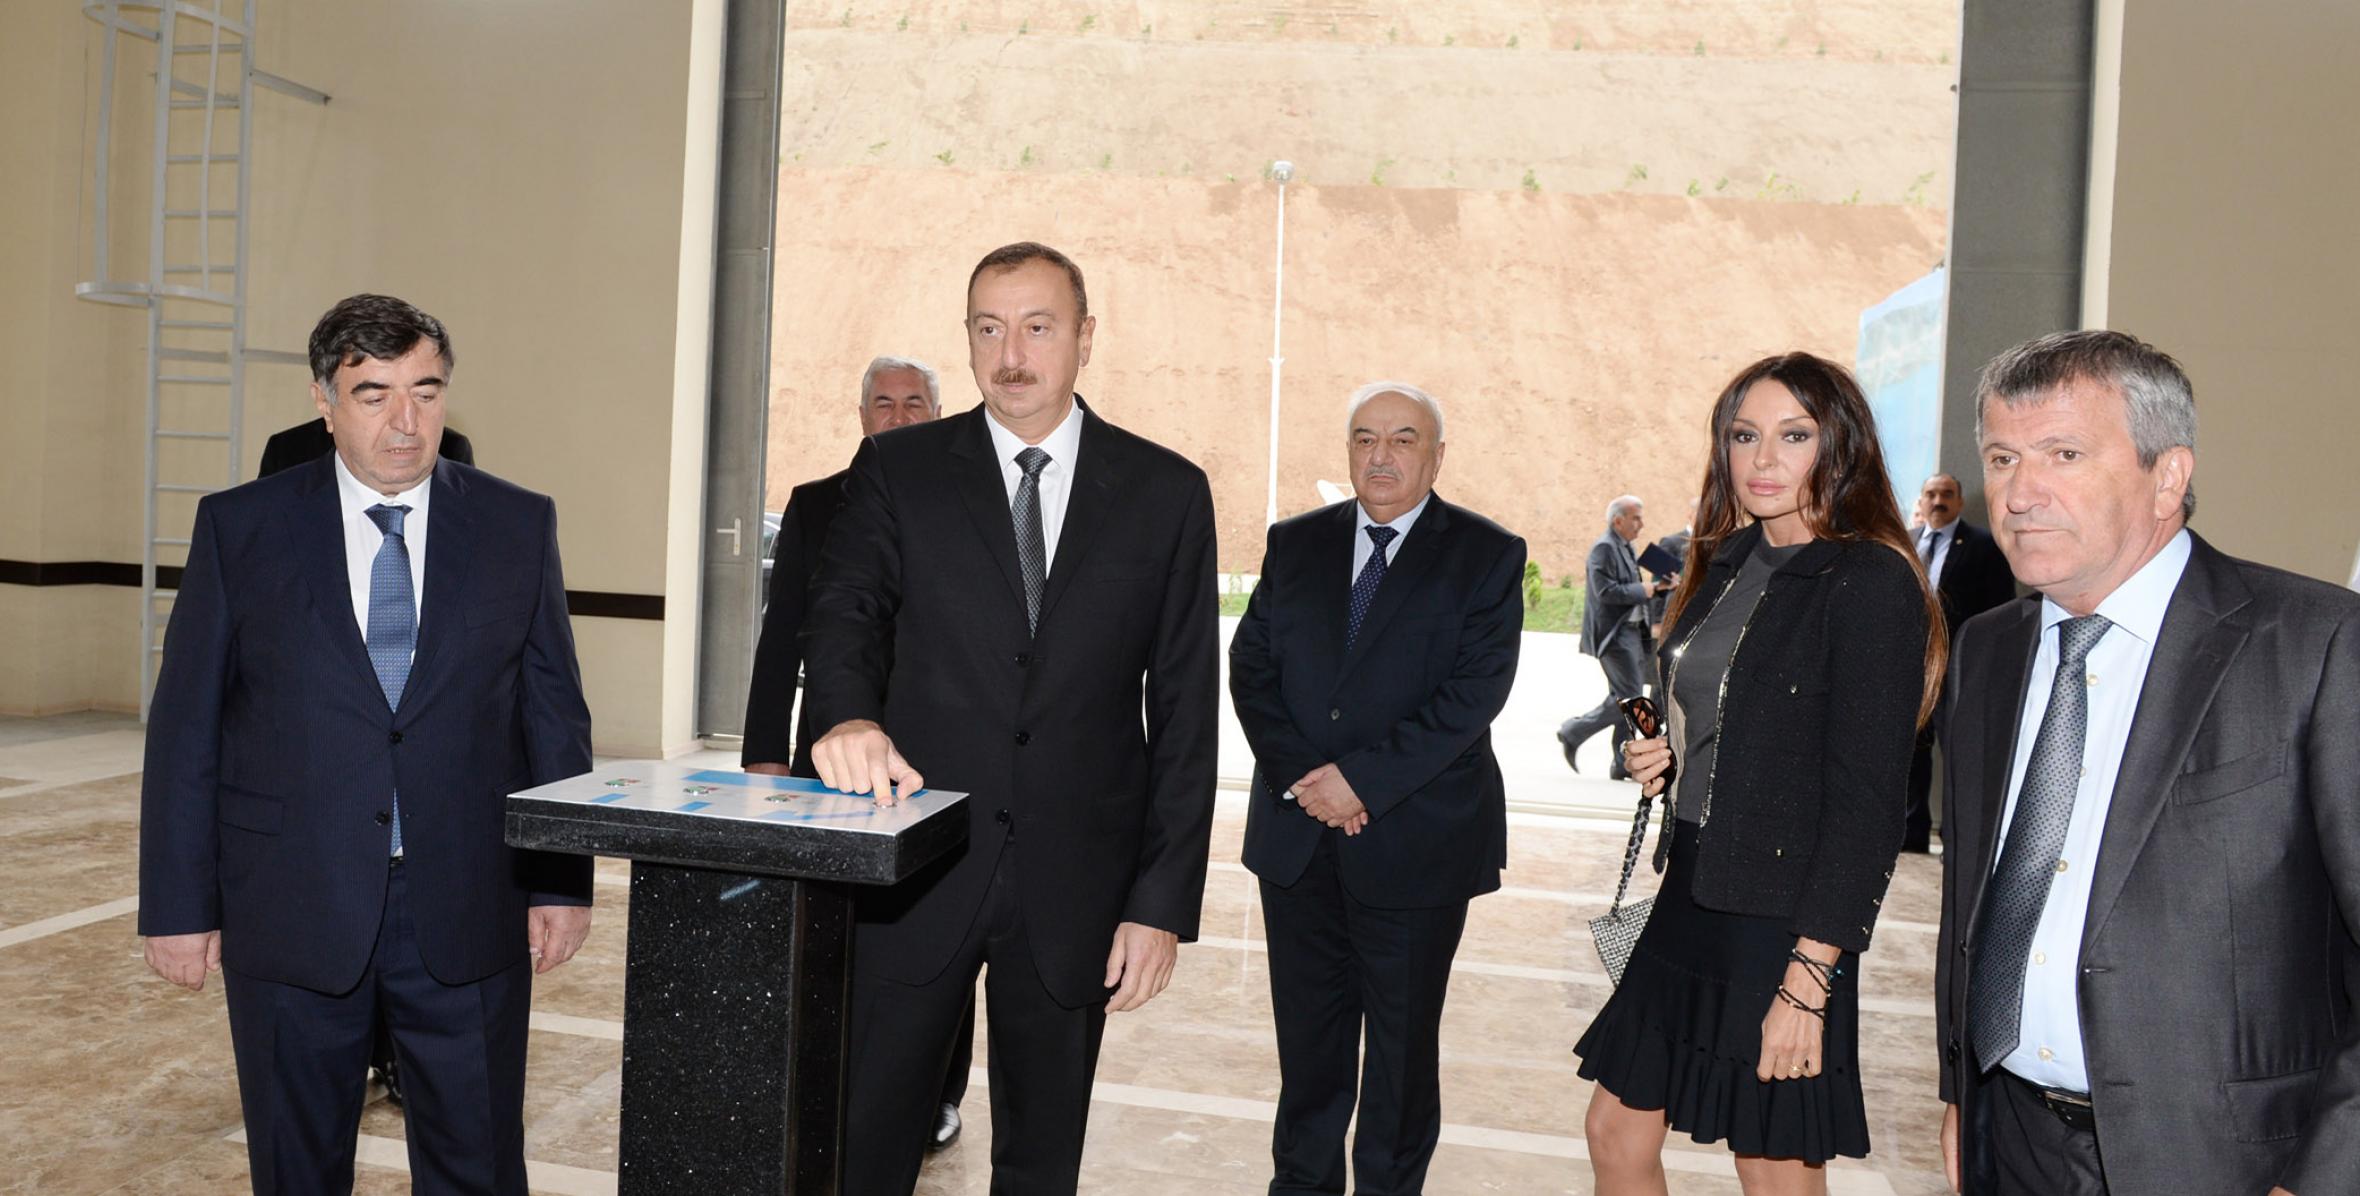 Ilham Aliyev attended the opening of the Takhtakorpu water reservoir, the Takhtakorpu hydro power plant and the Takhtakorpu-Jeyranbatan water canal built in Shabran District